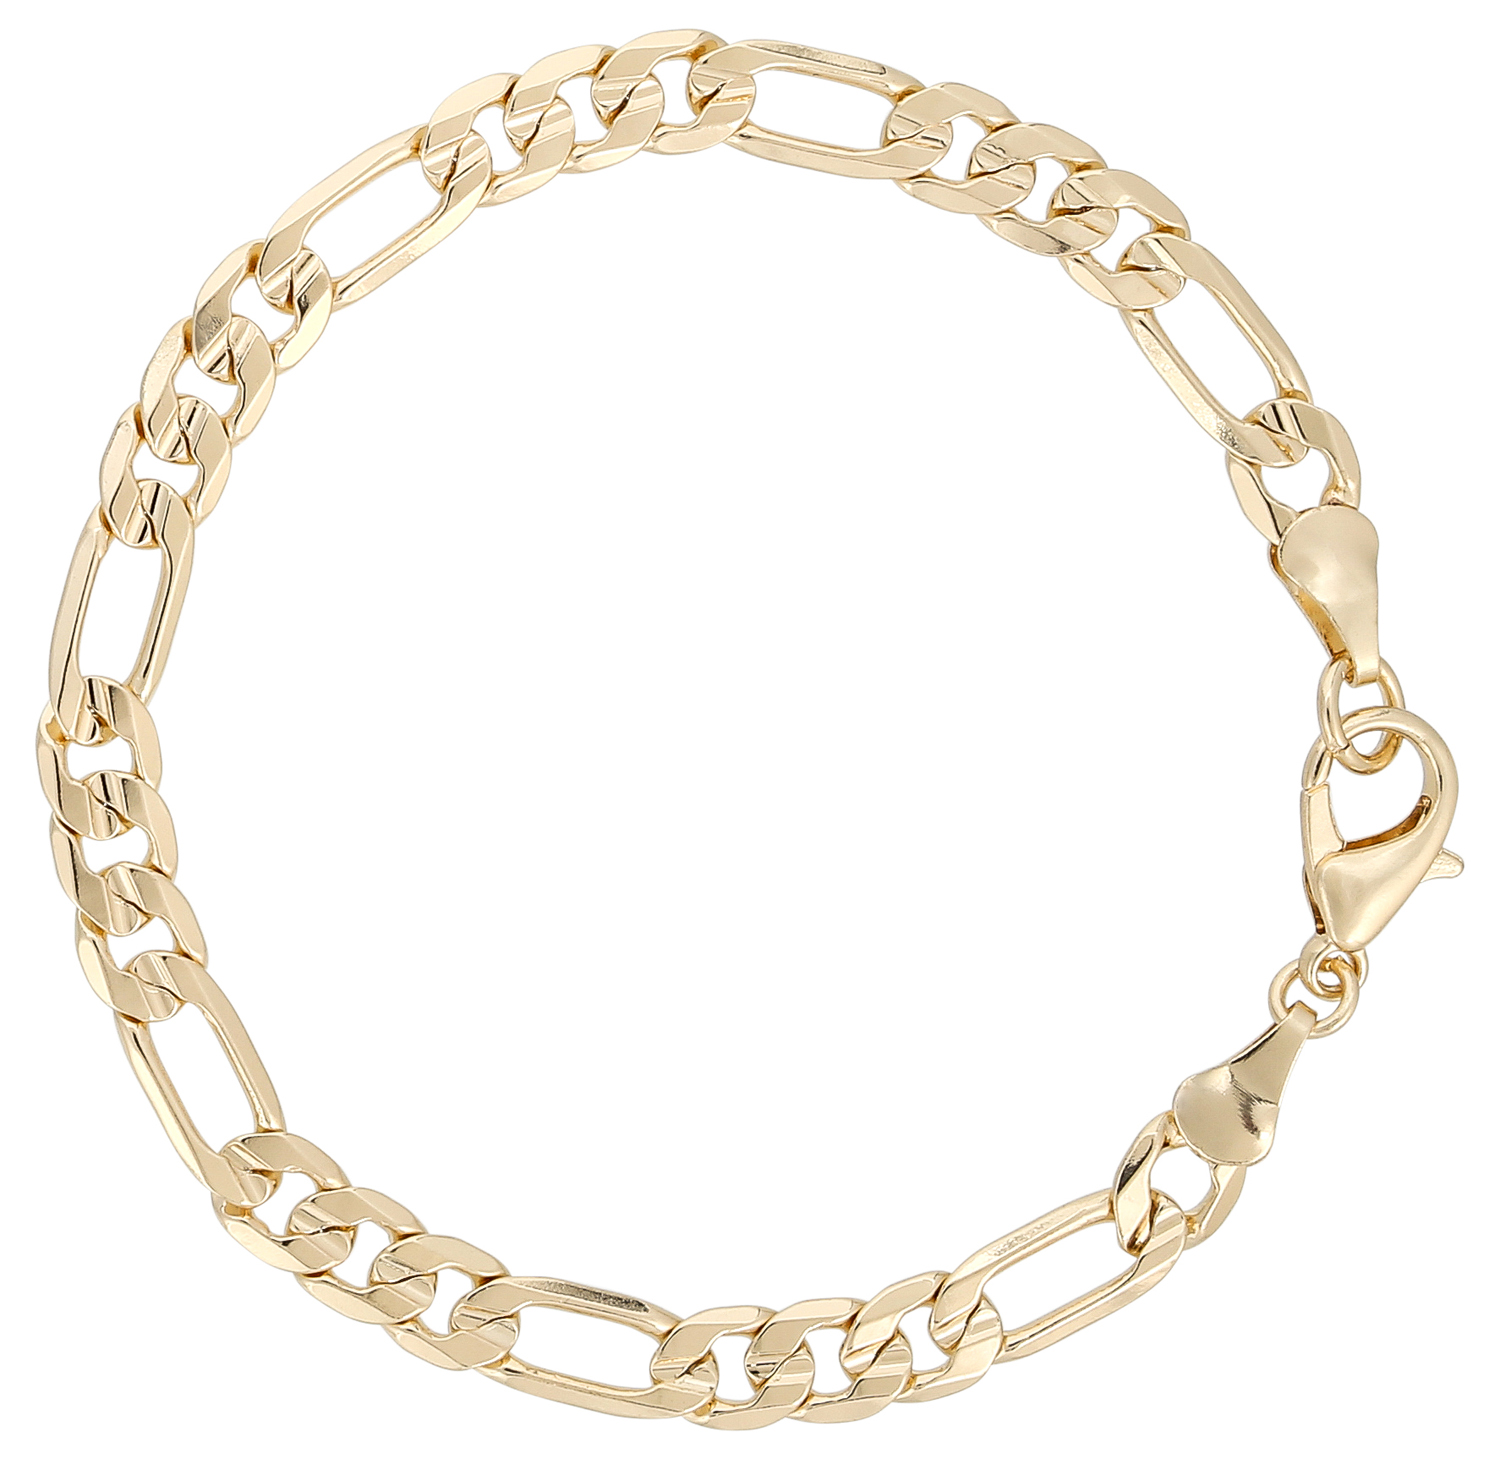 Bracelet - Fine Golden Chains